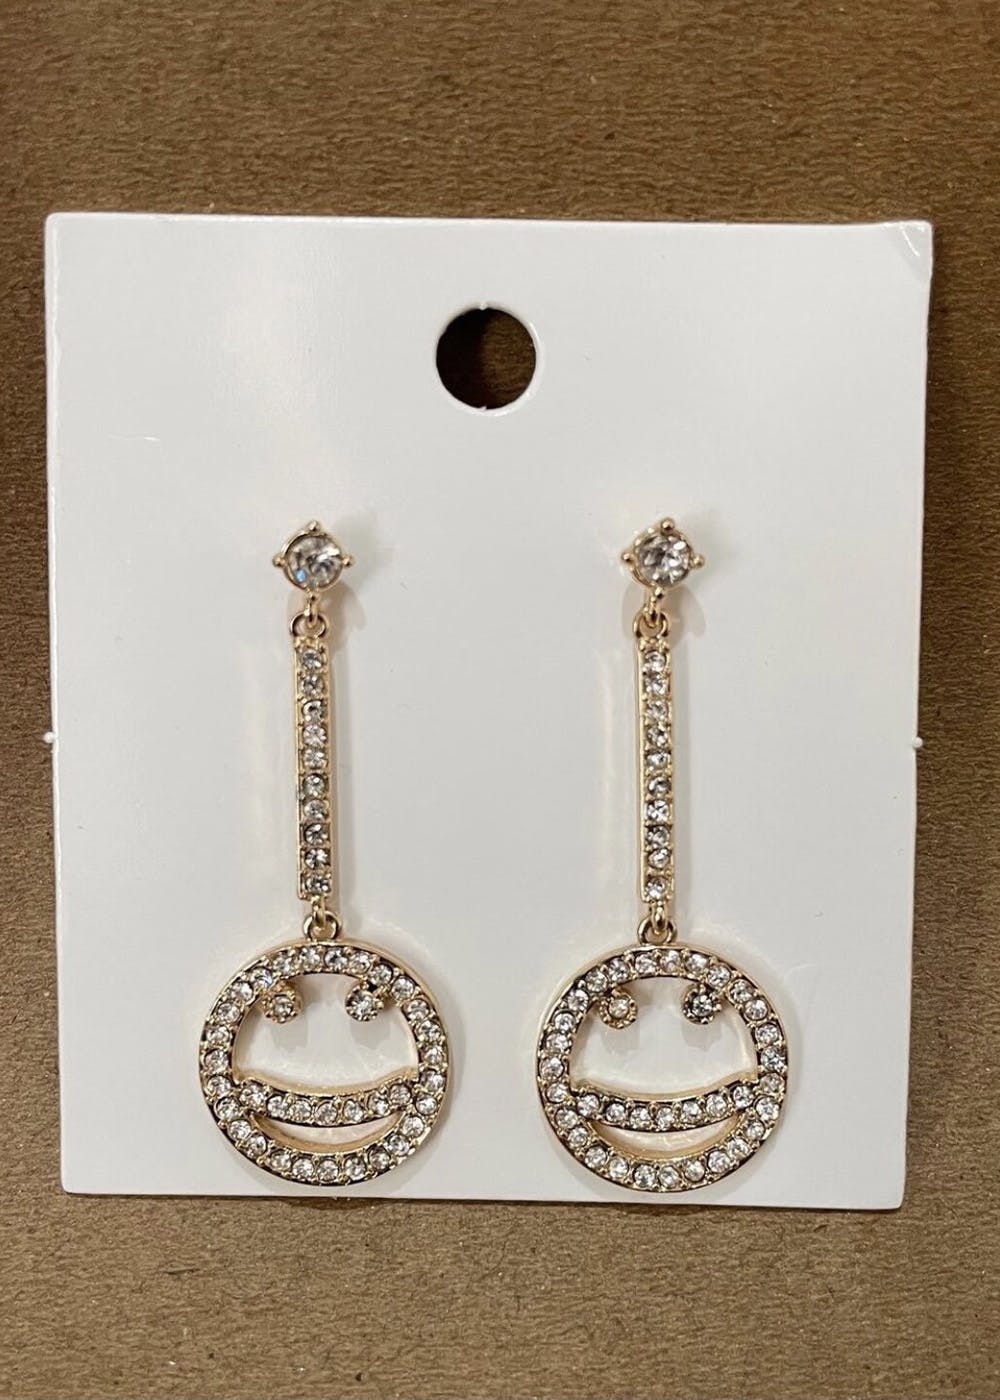 Get Smiley Rhinestone Earrings at ₹ 640 | LBB Shop